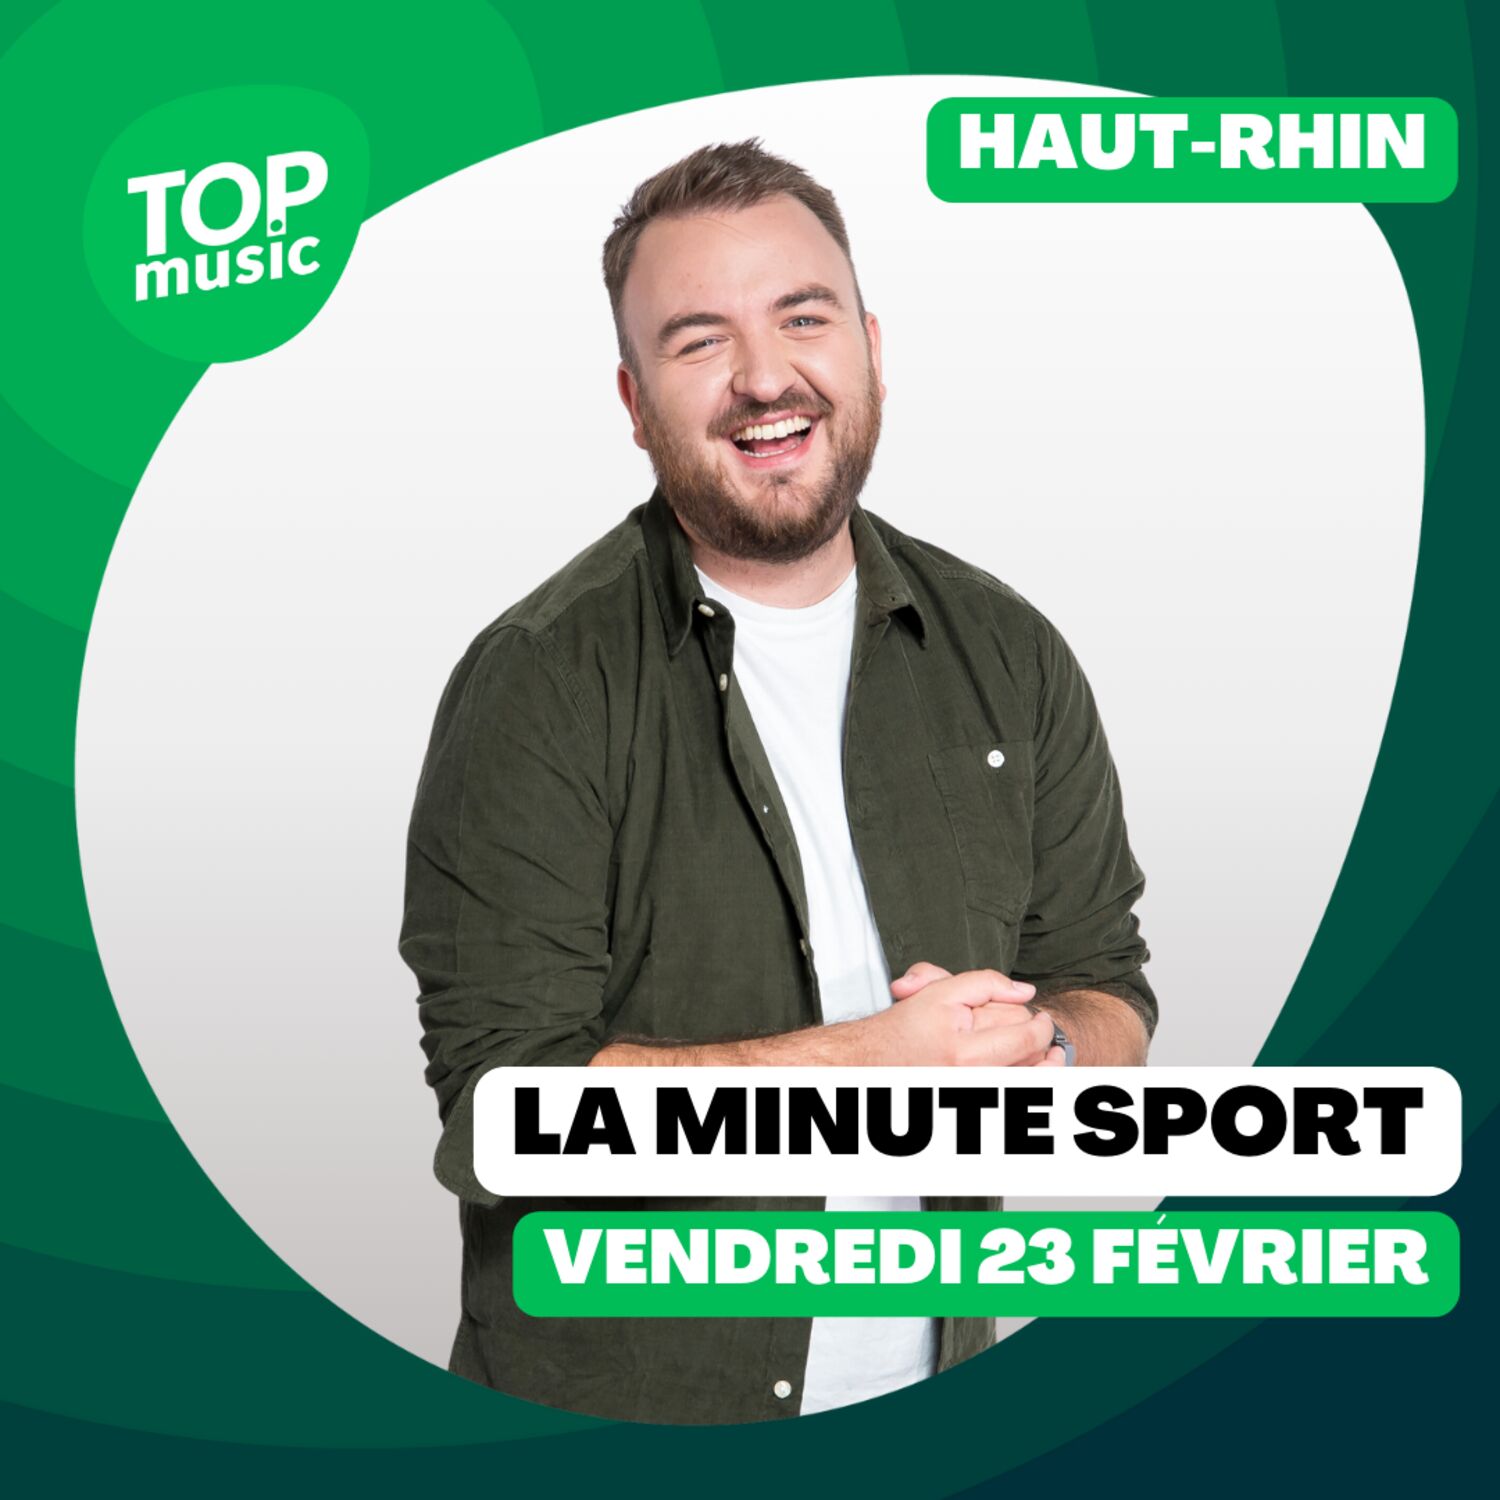 La Minute sport du Haut-Rhin - vendredi 23 février